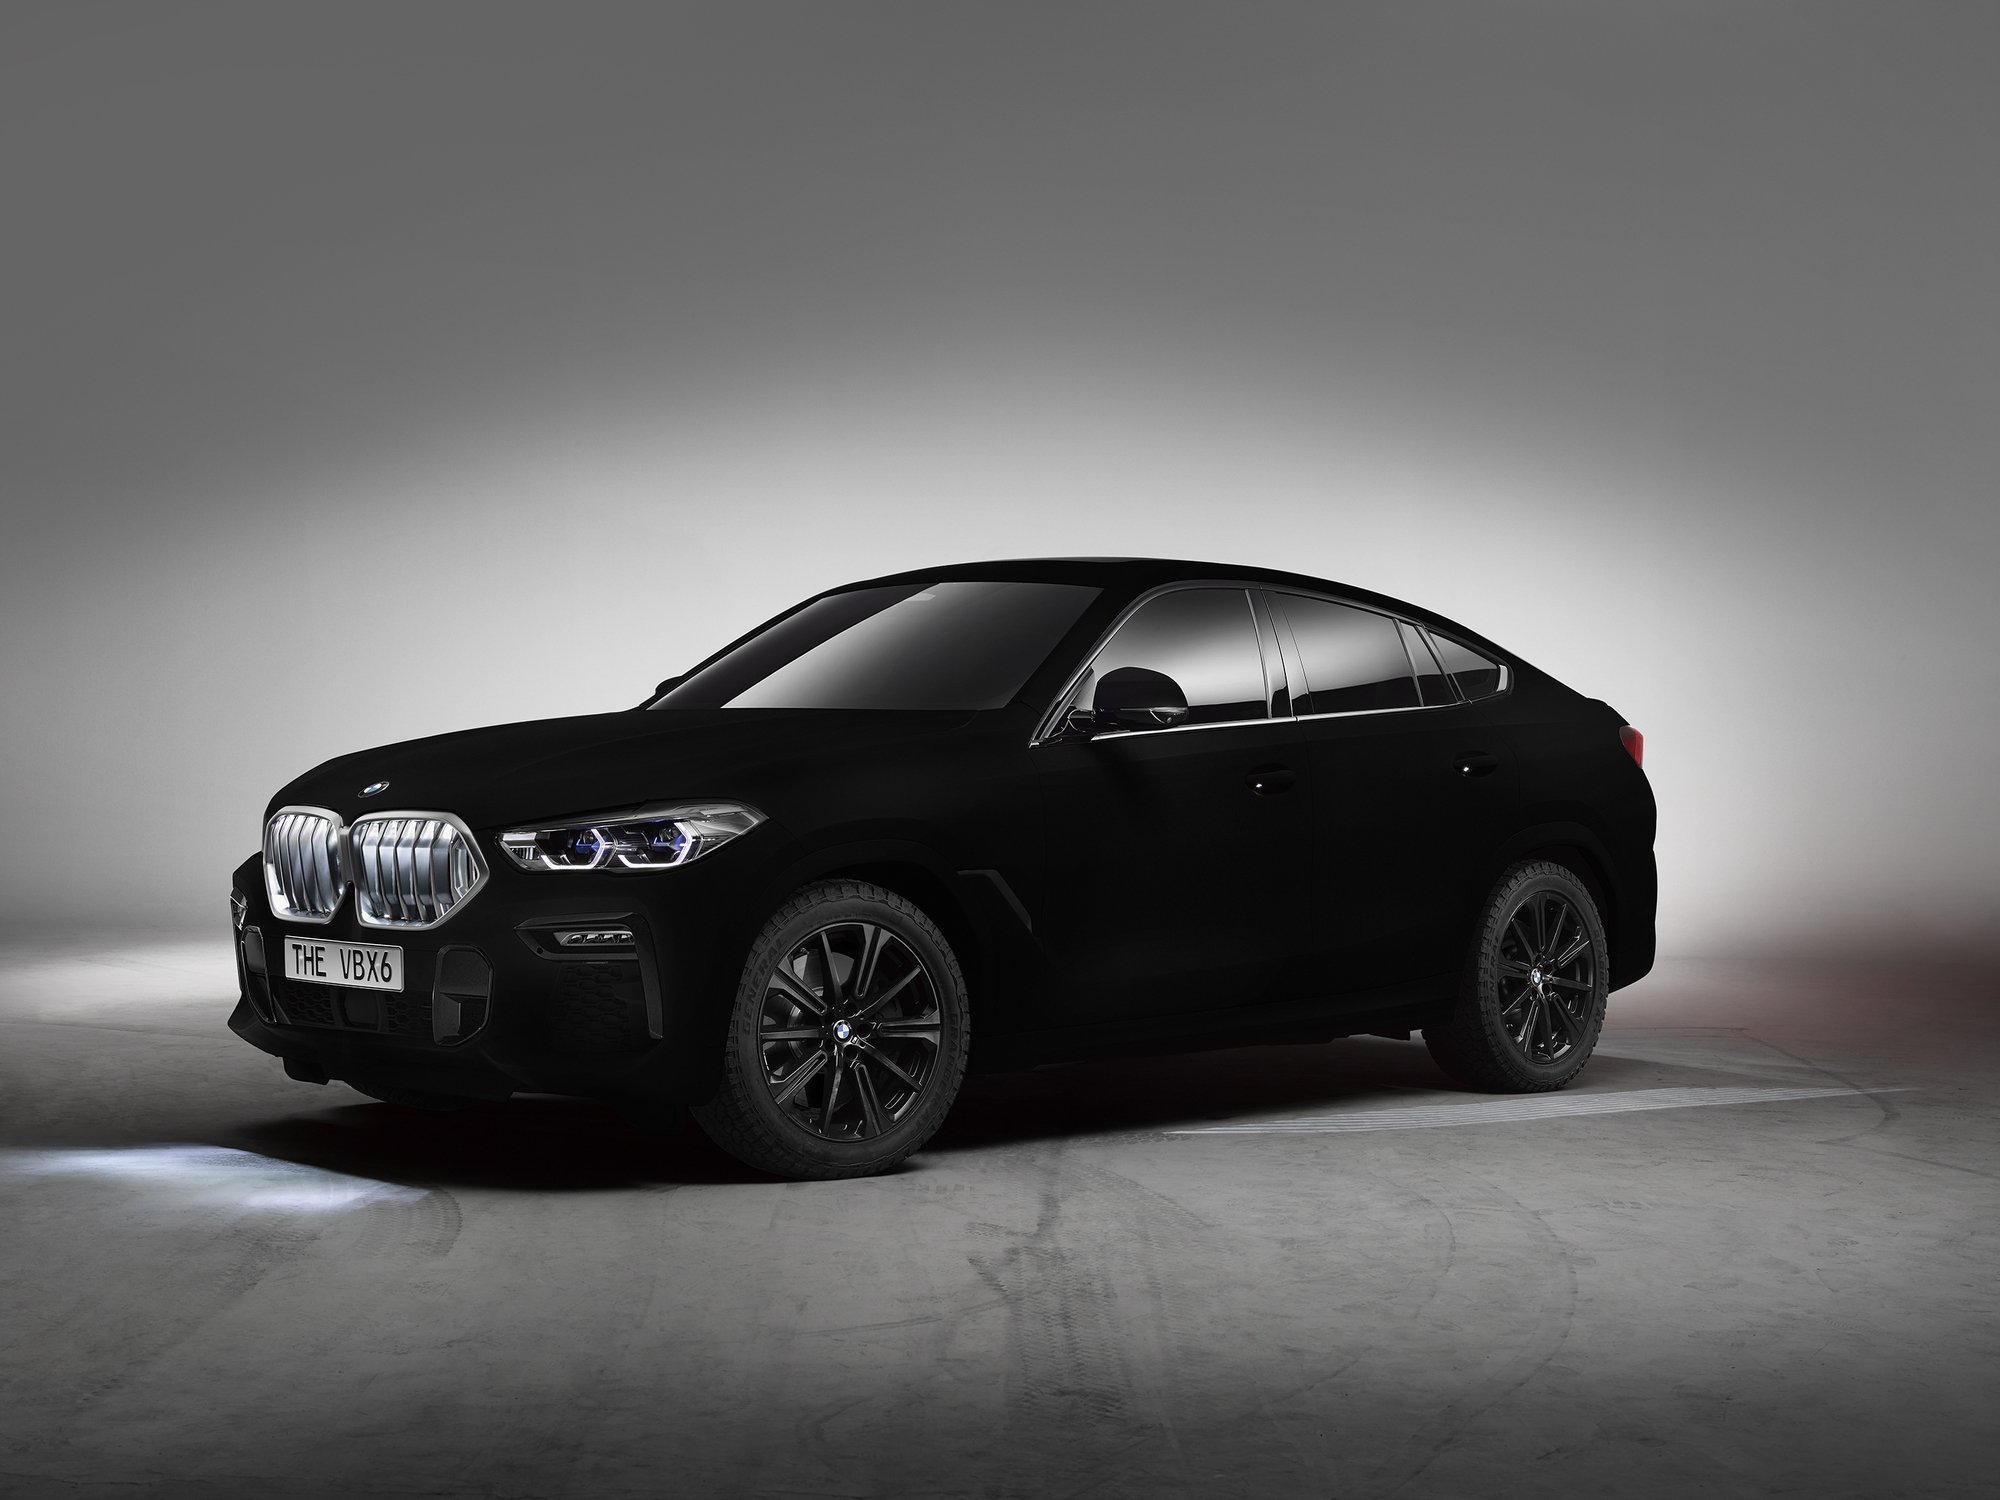 BMW X6 Vantablack a Salone di Francoforte 2019 [Video]